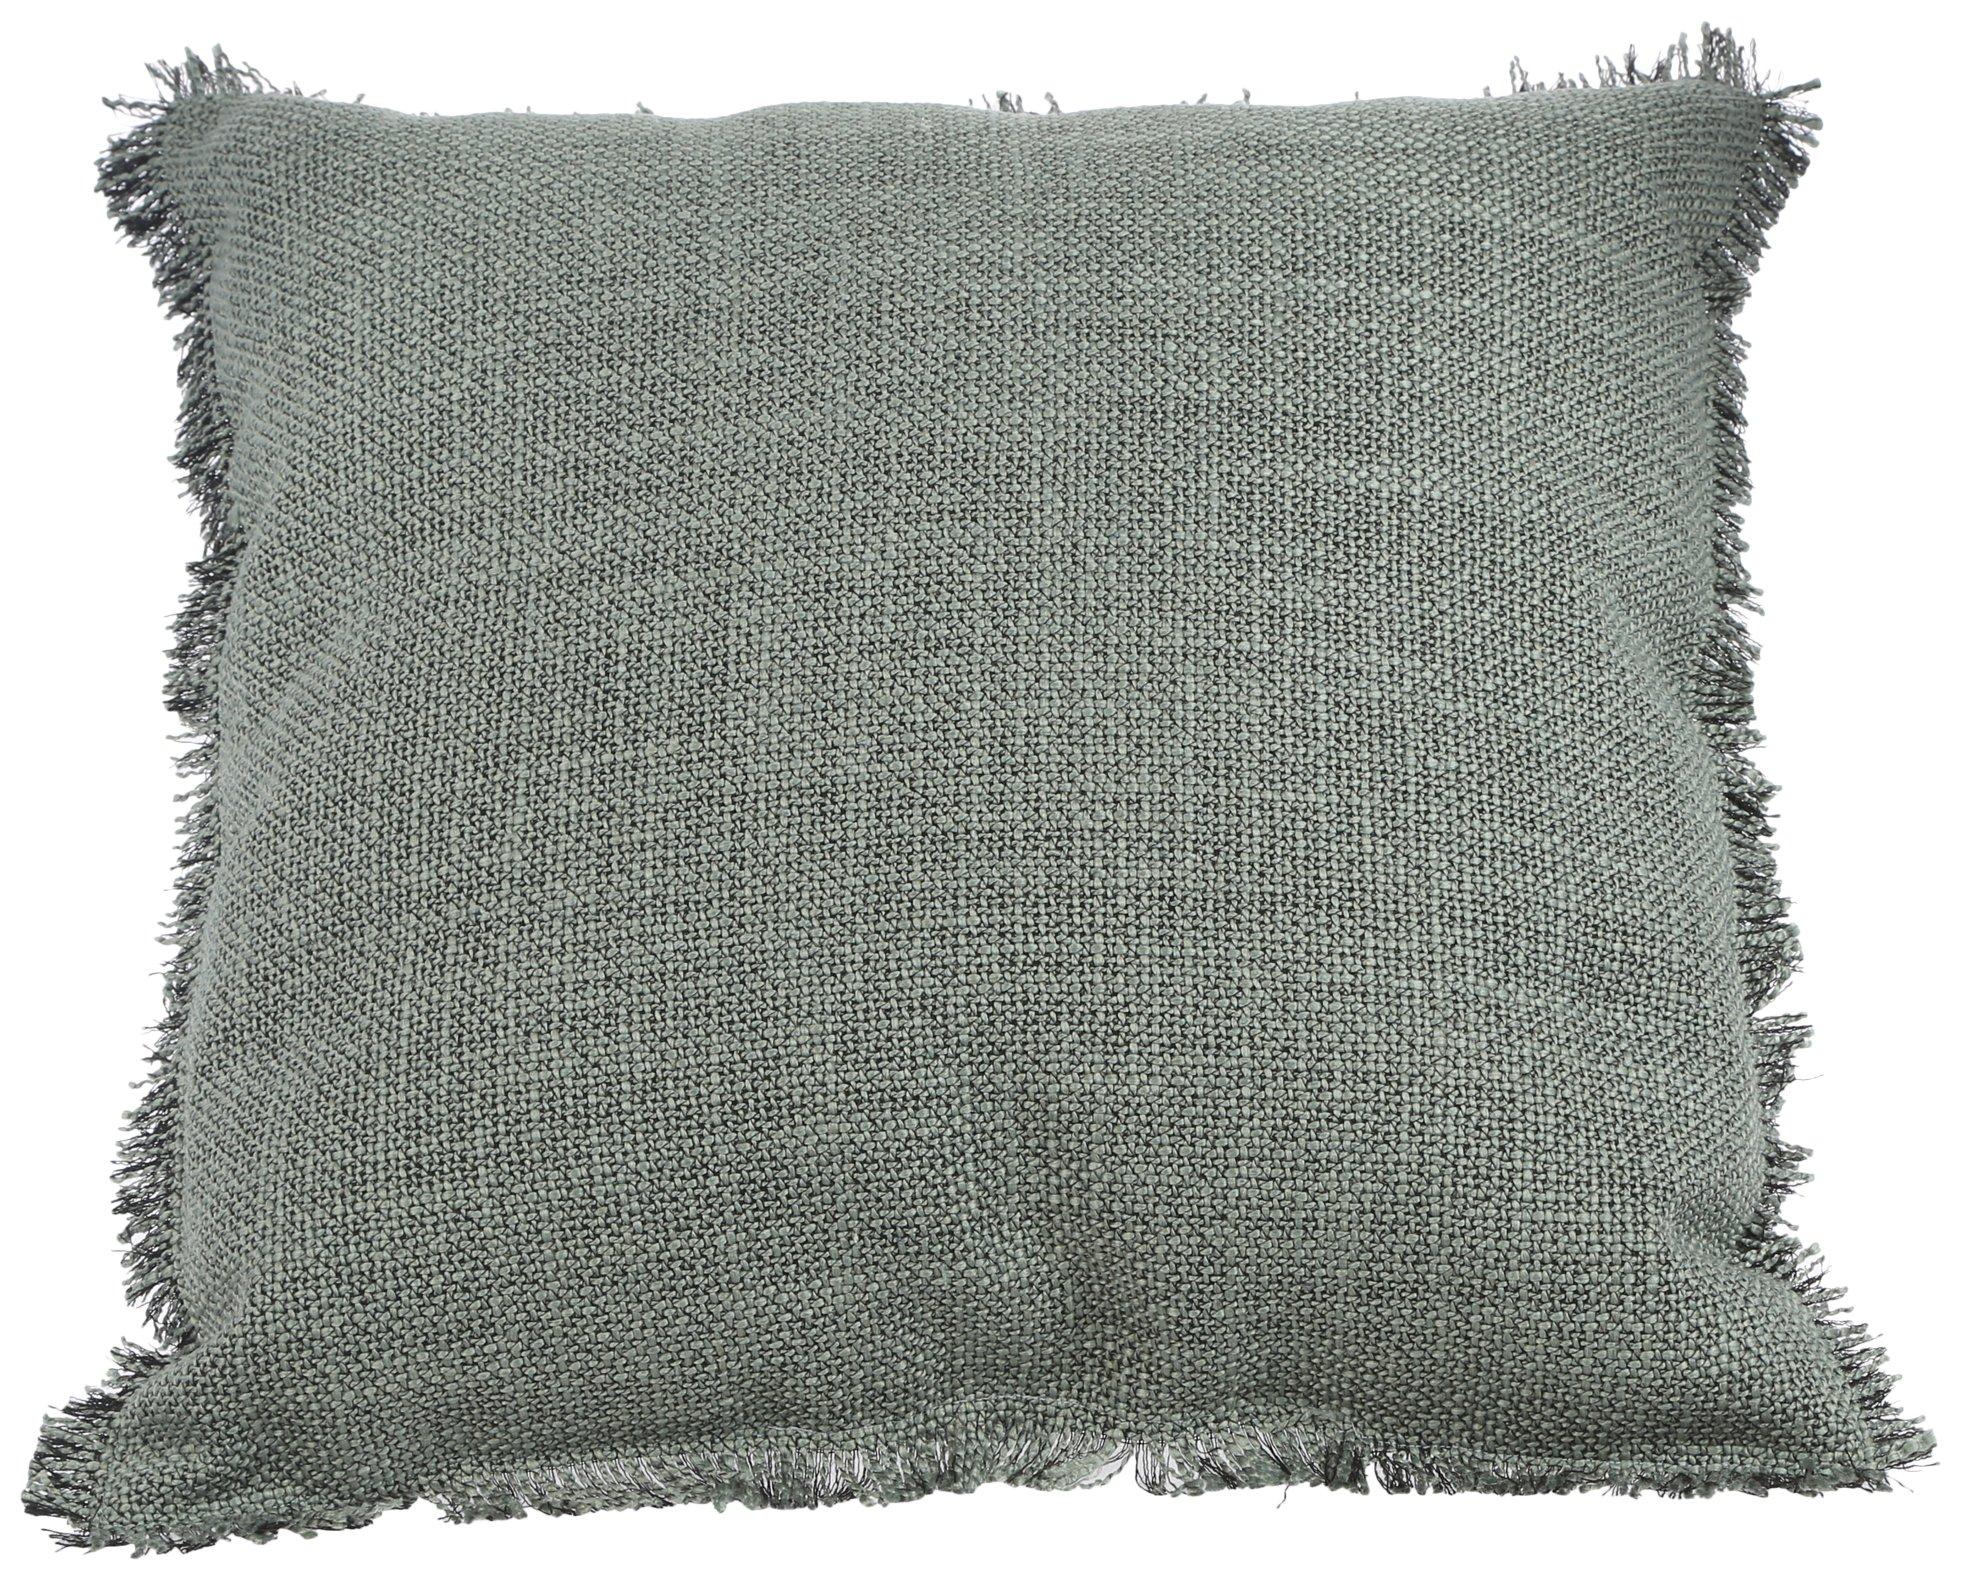 Arlee 20 x 20 Woven Fringe Decorative Pillow